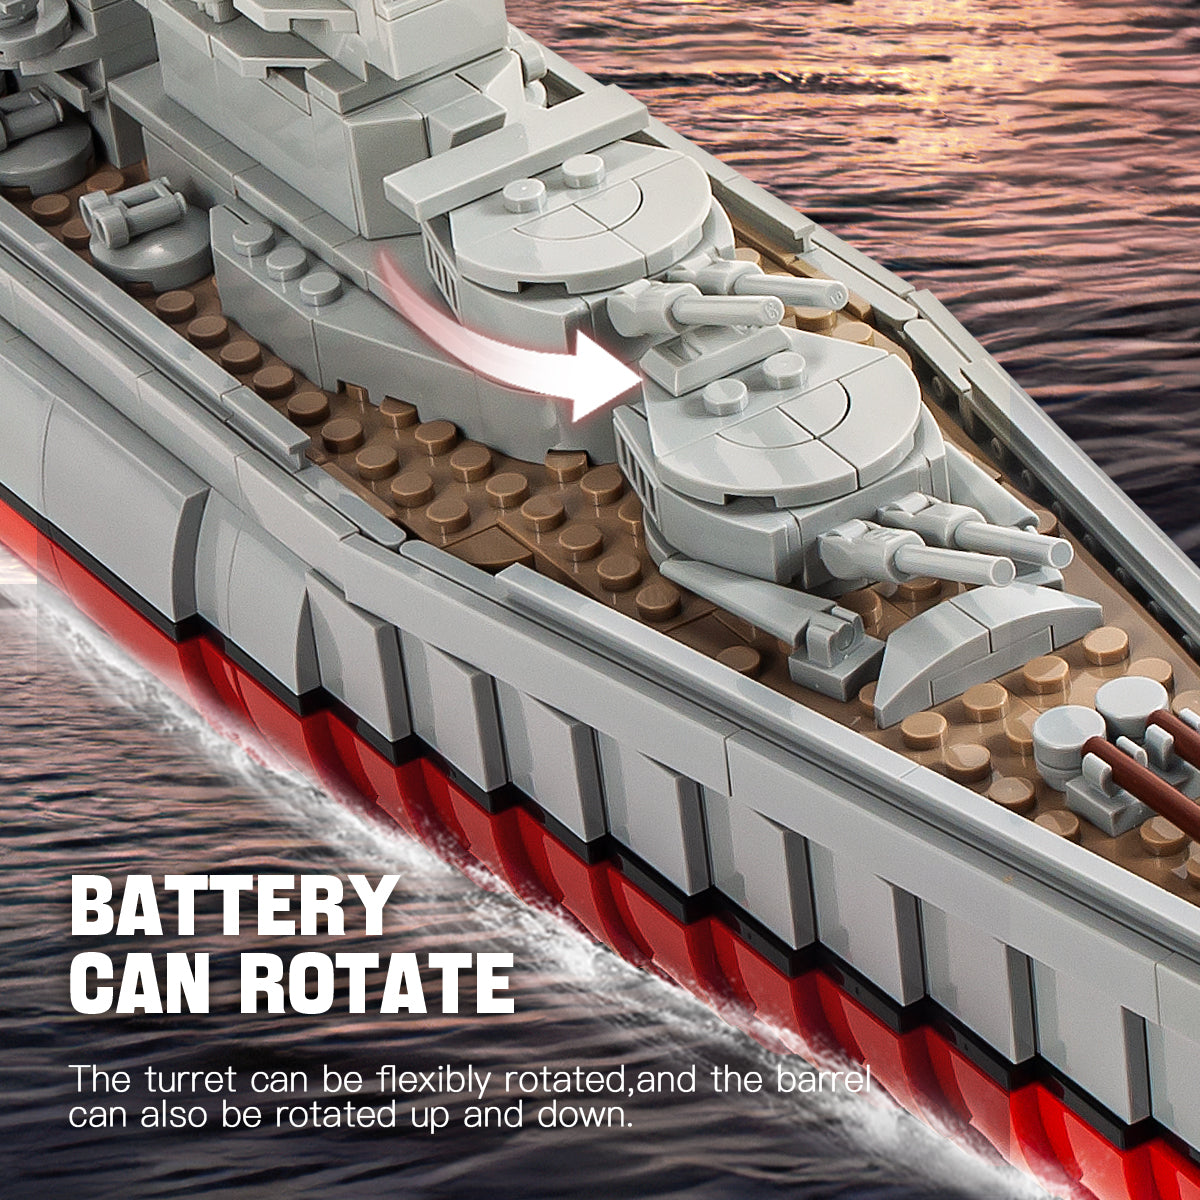 DAHONPA Ship Series Queen Elizabeth Class Battleship Building Blocks Set with 1564 Pieces